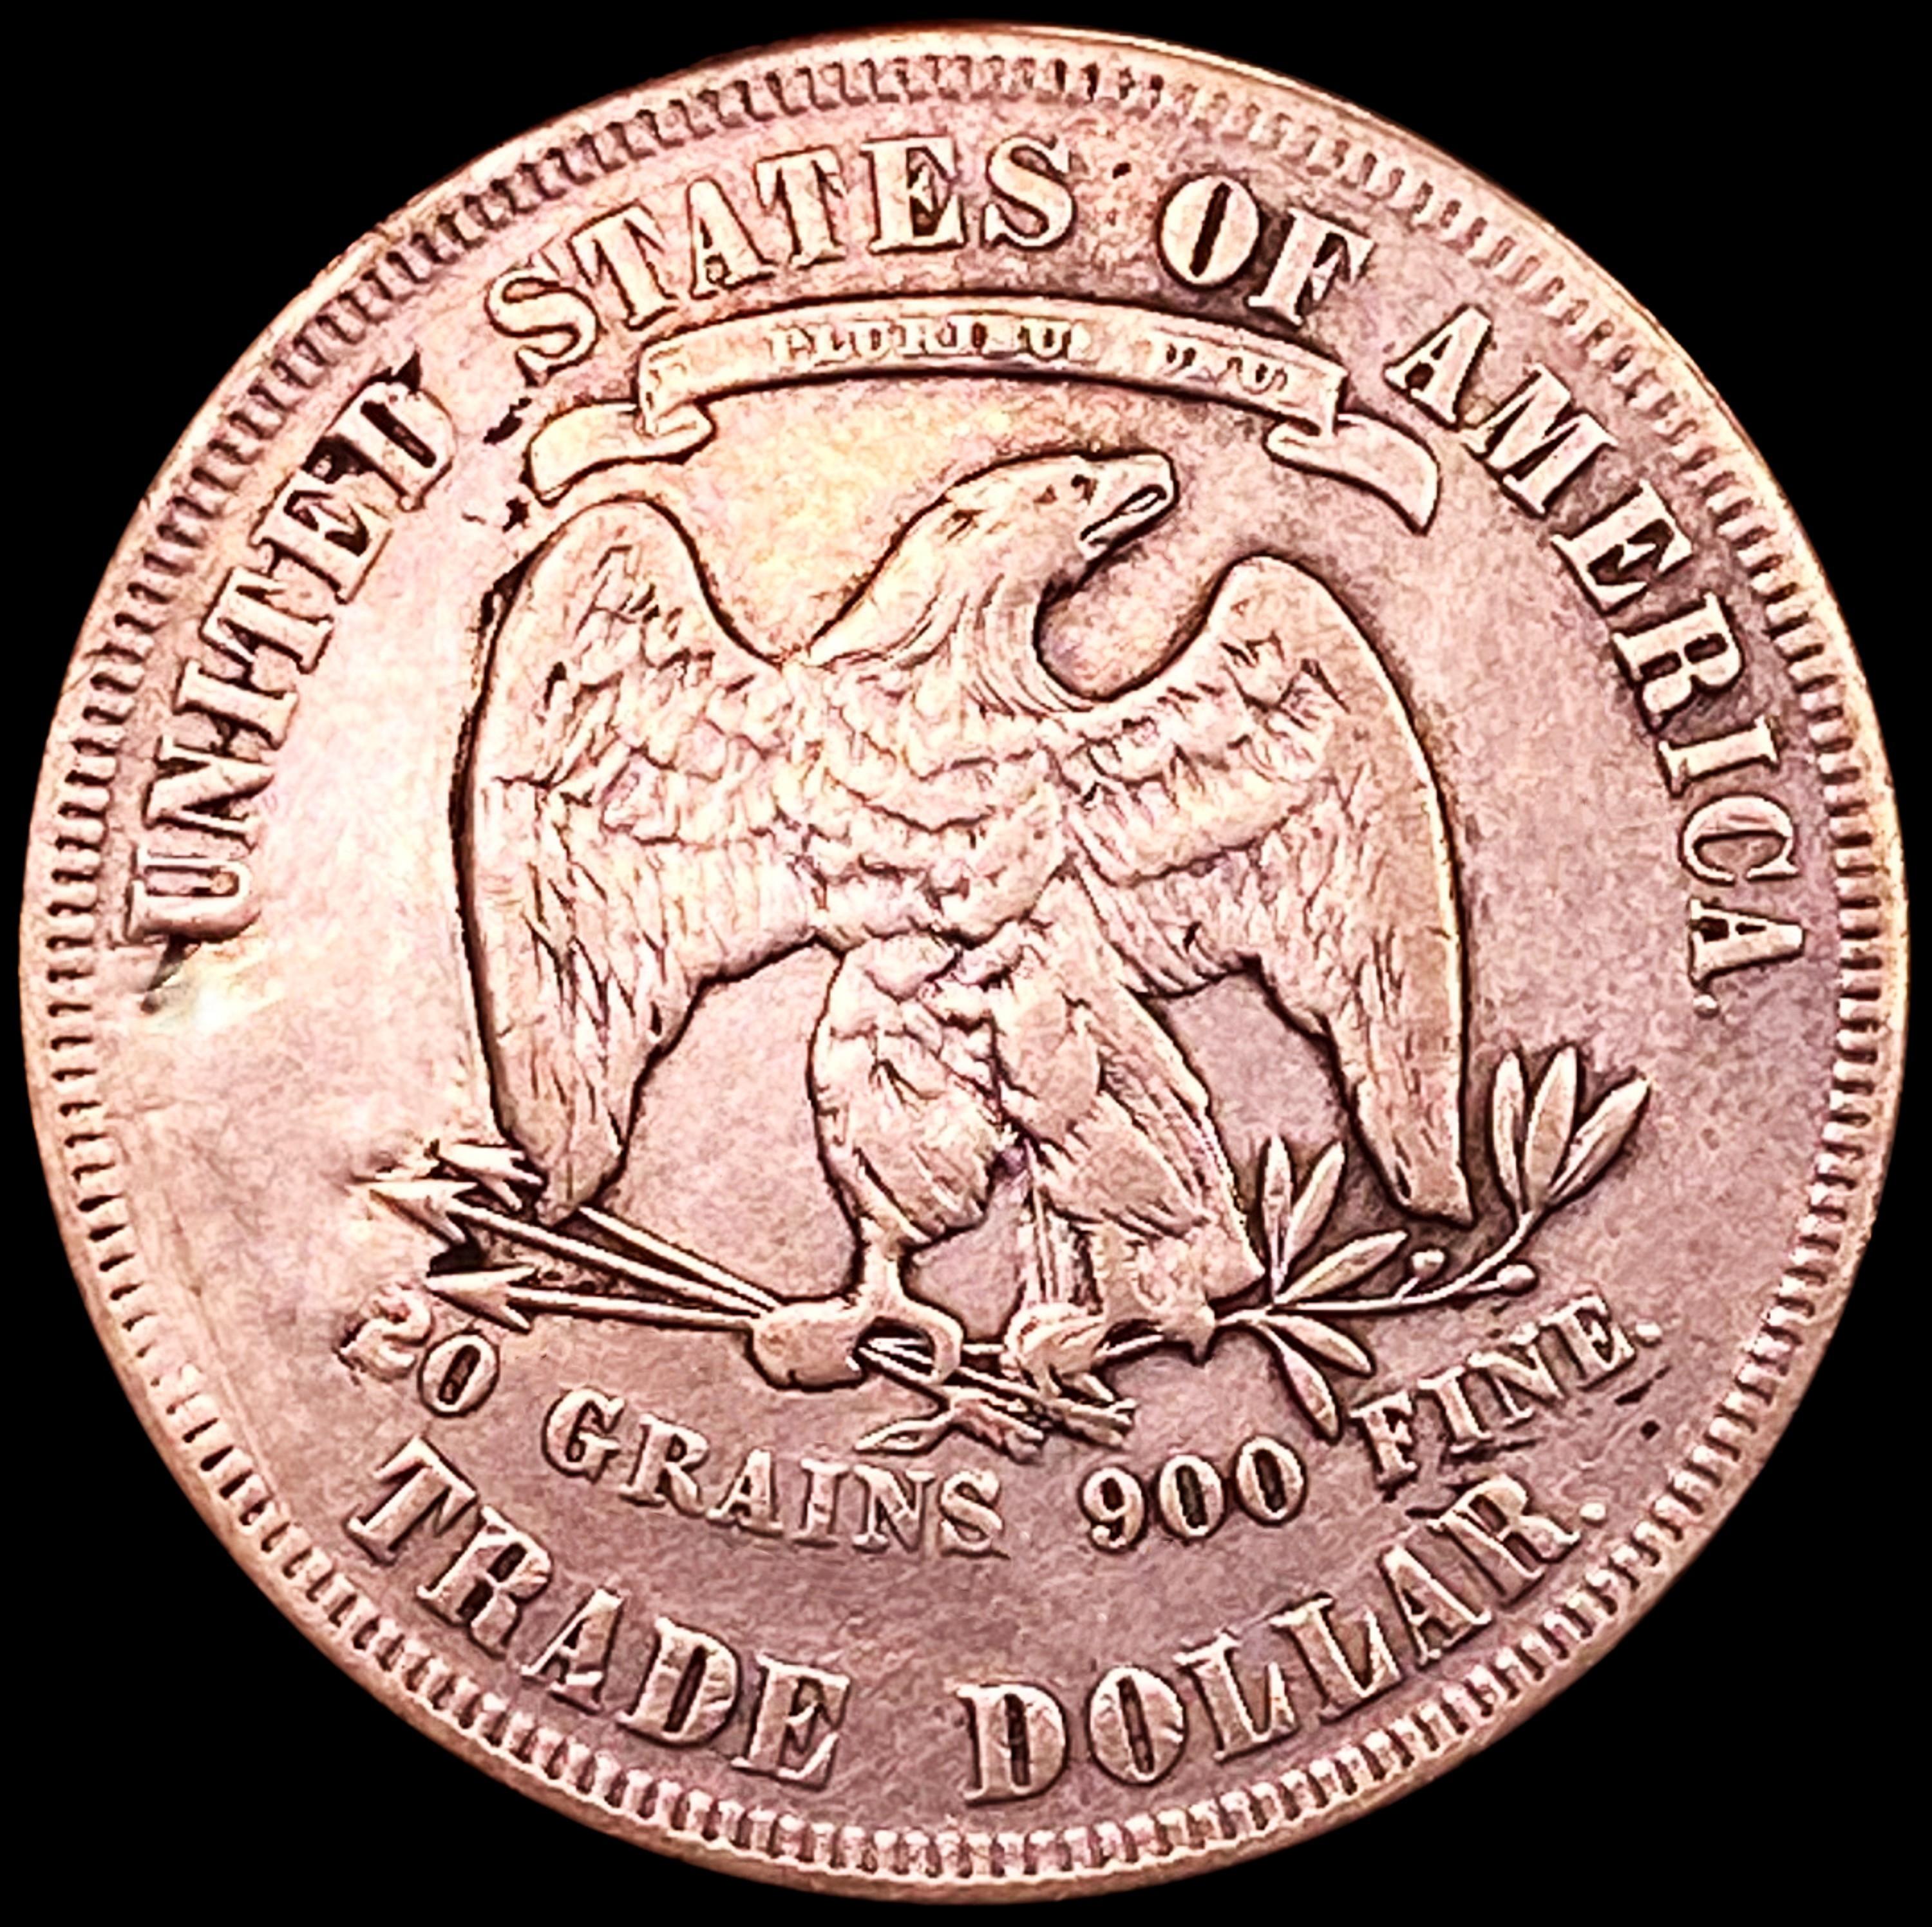 1880 Silver Trade Dollar PROOF